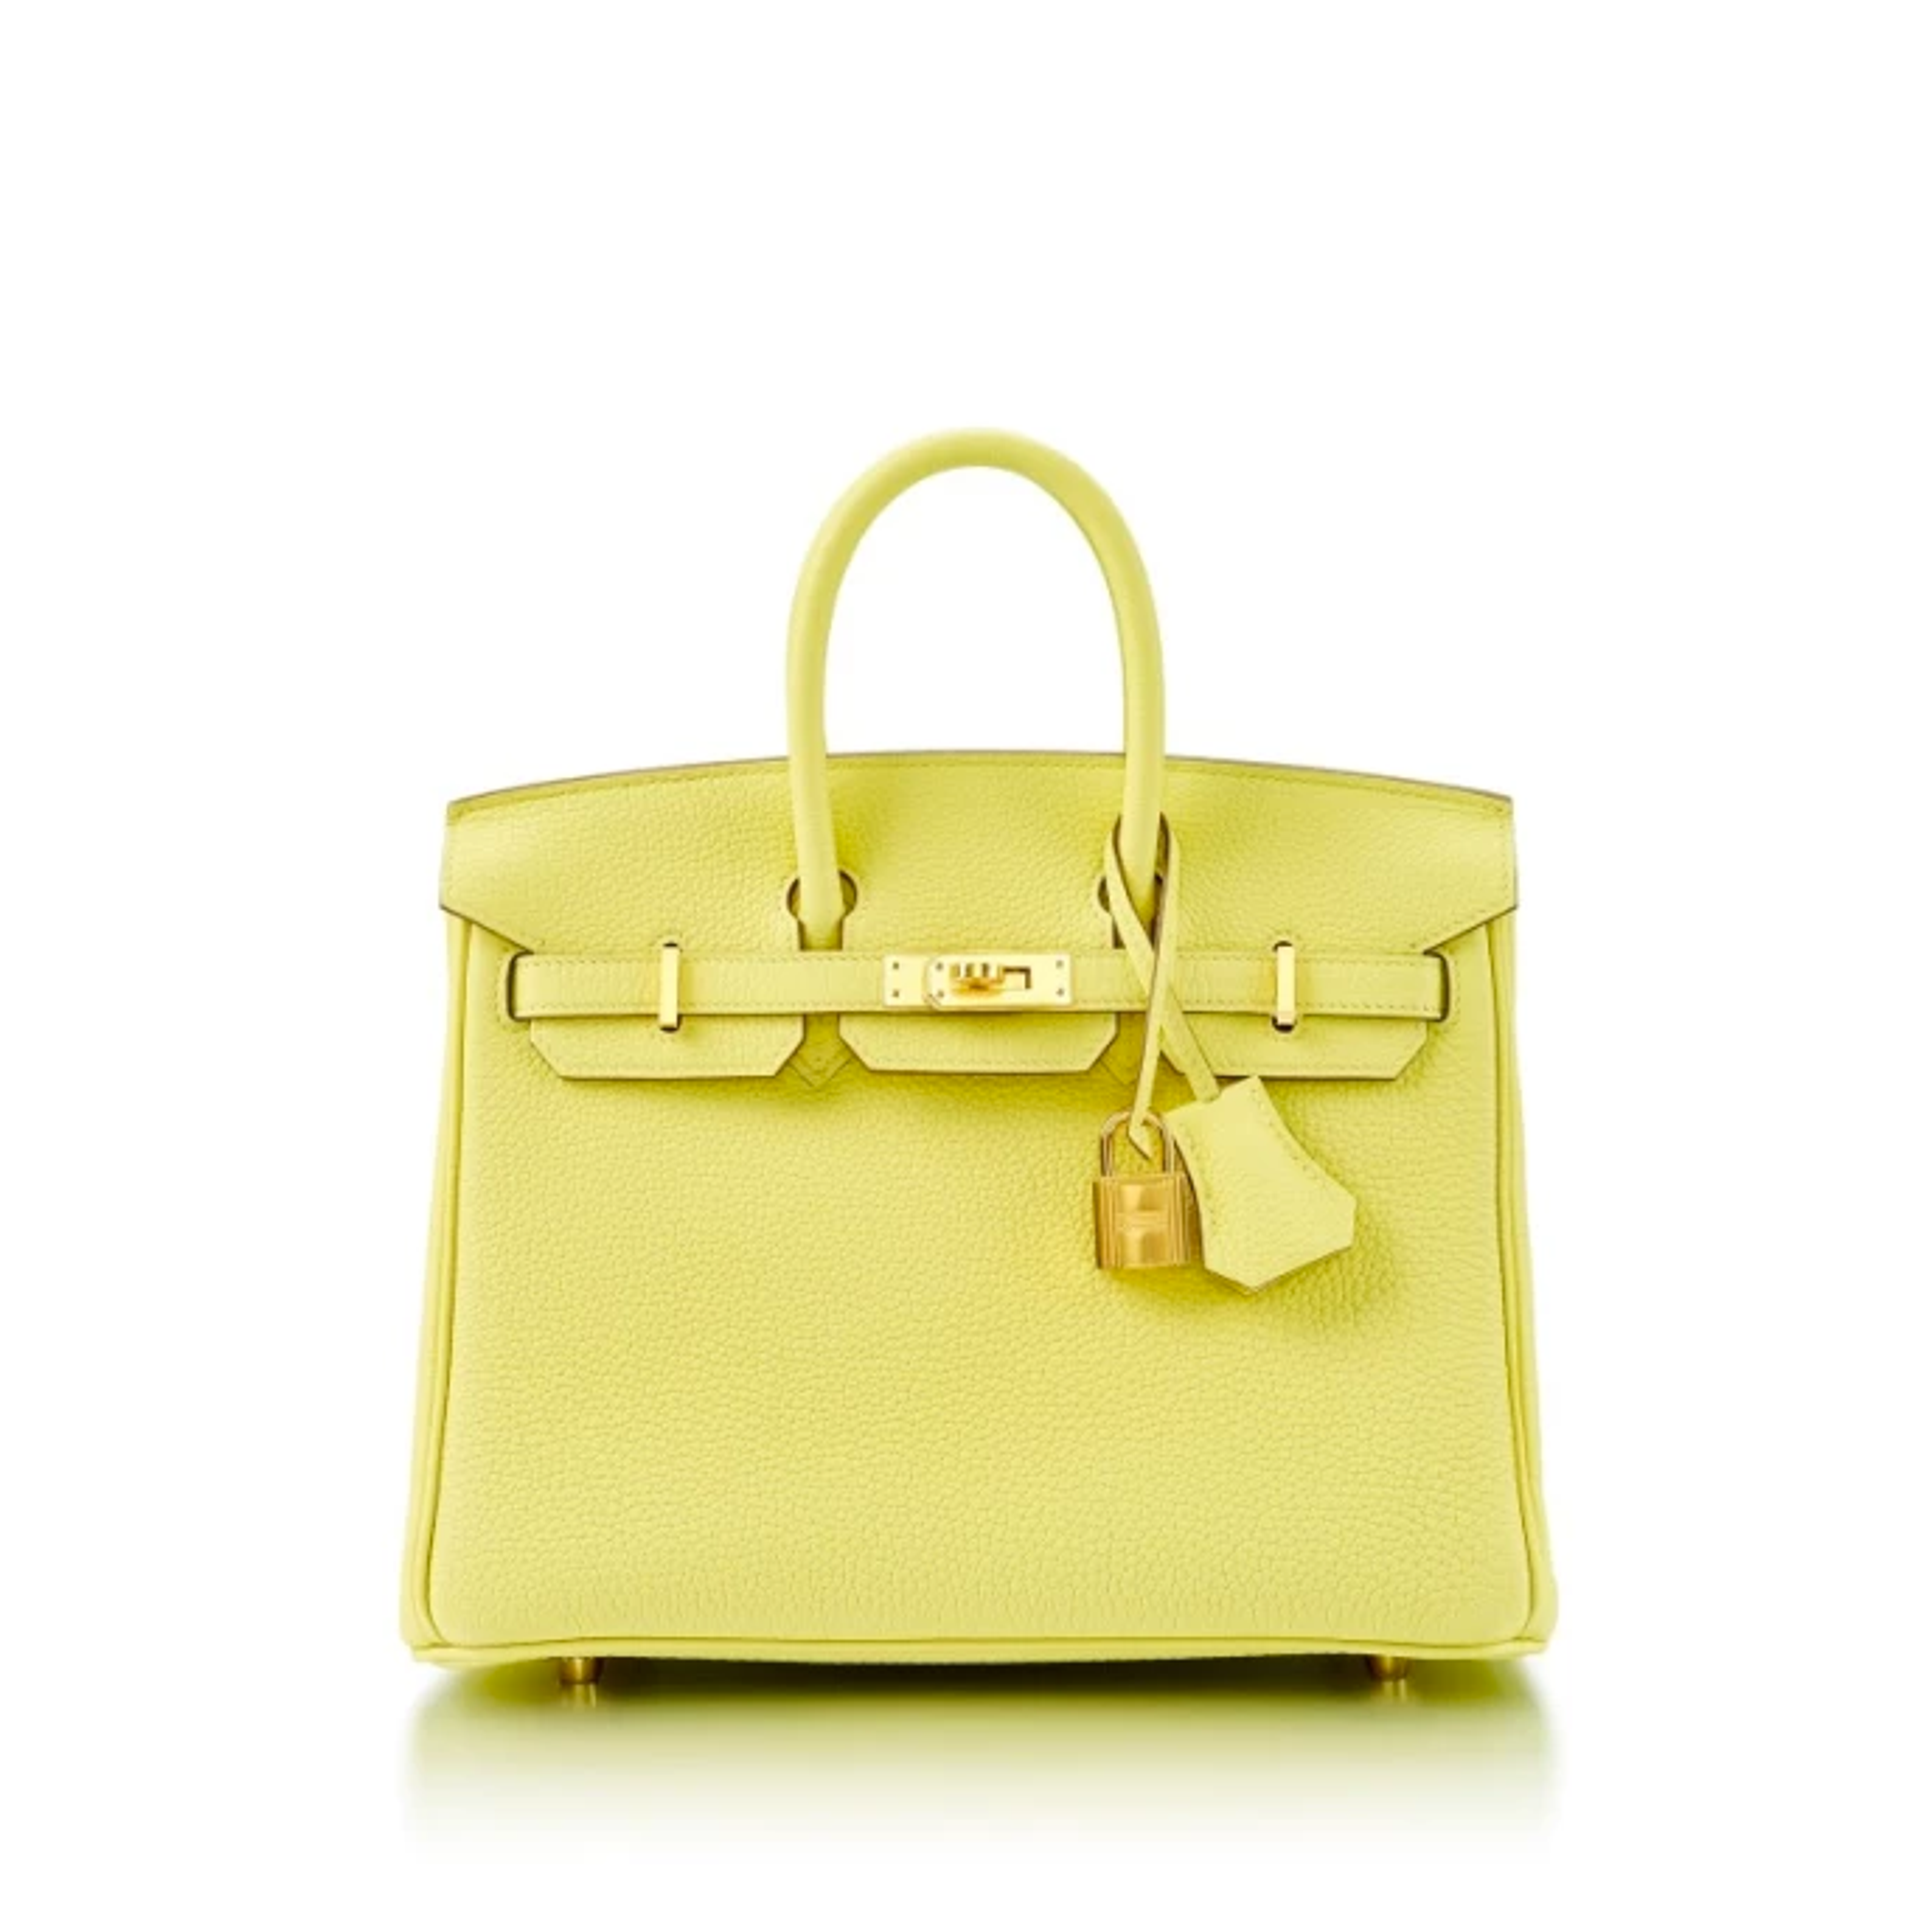 Bright yellow Hermès handbag with gold hardware